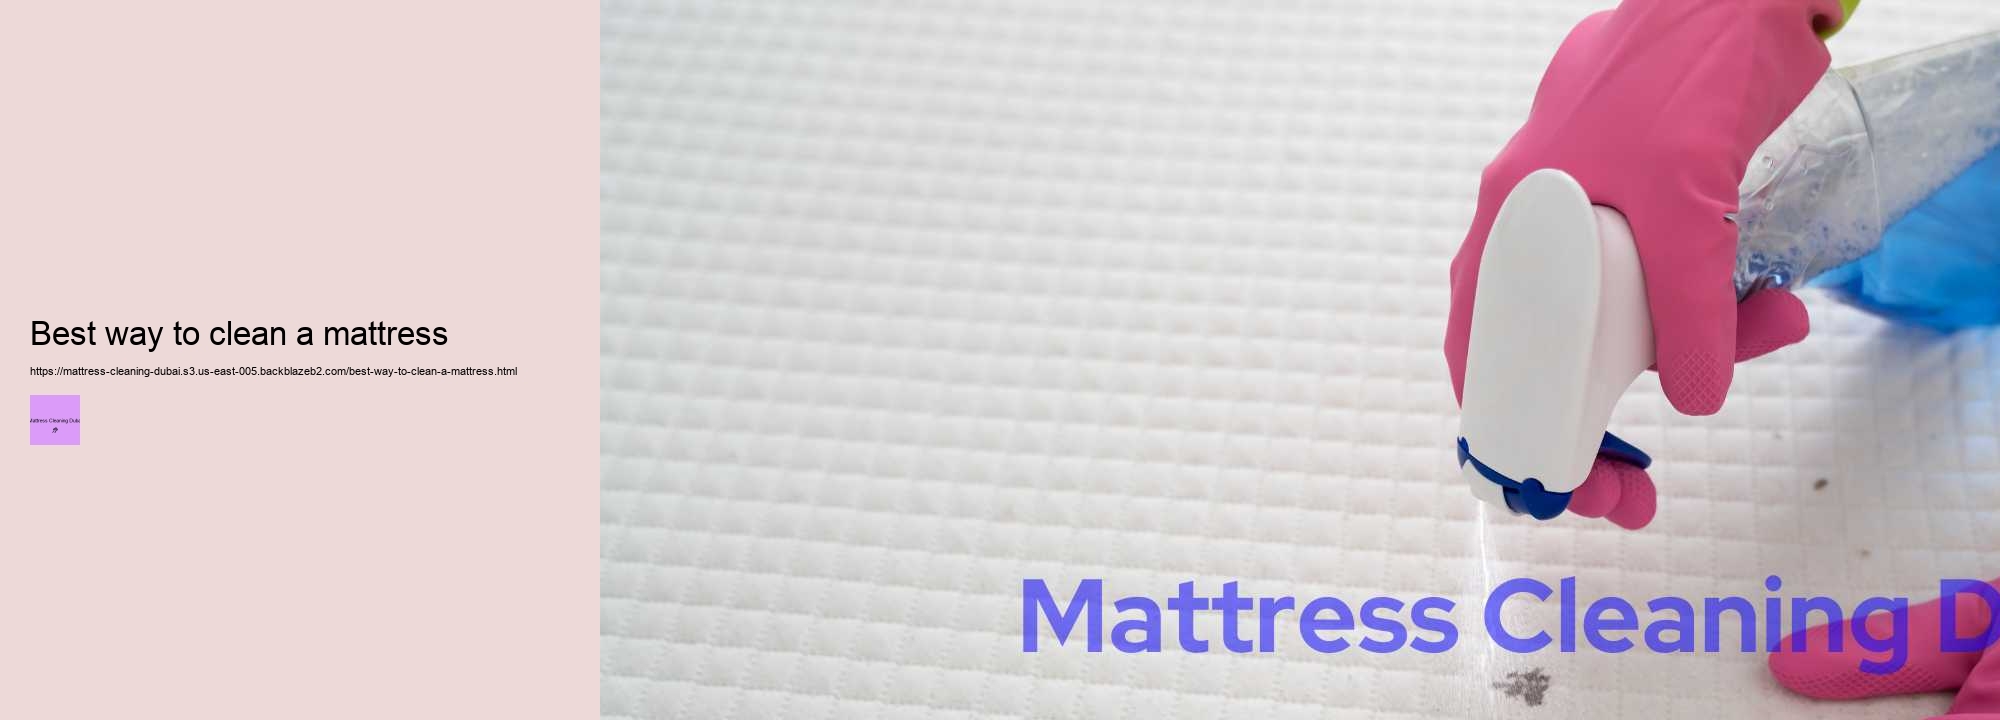 Best way to clean a mattress